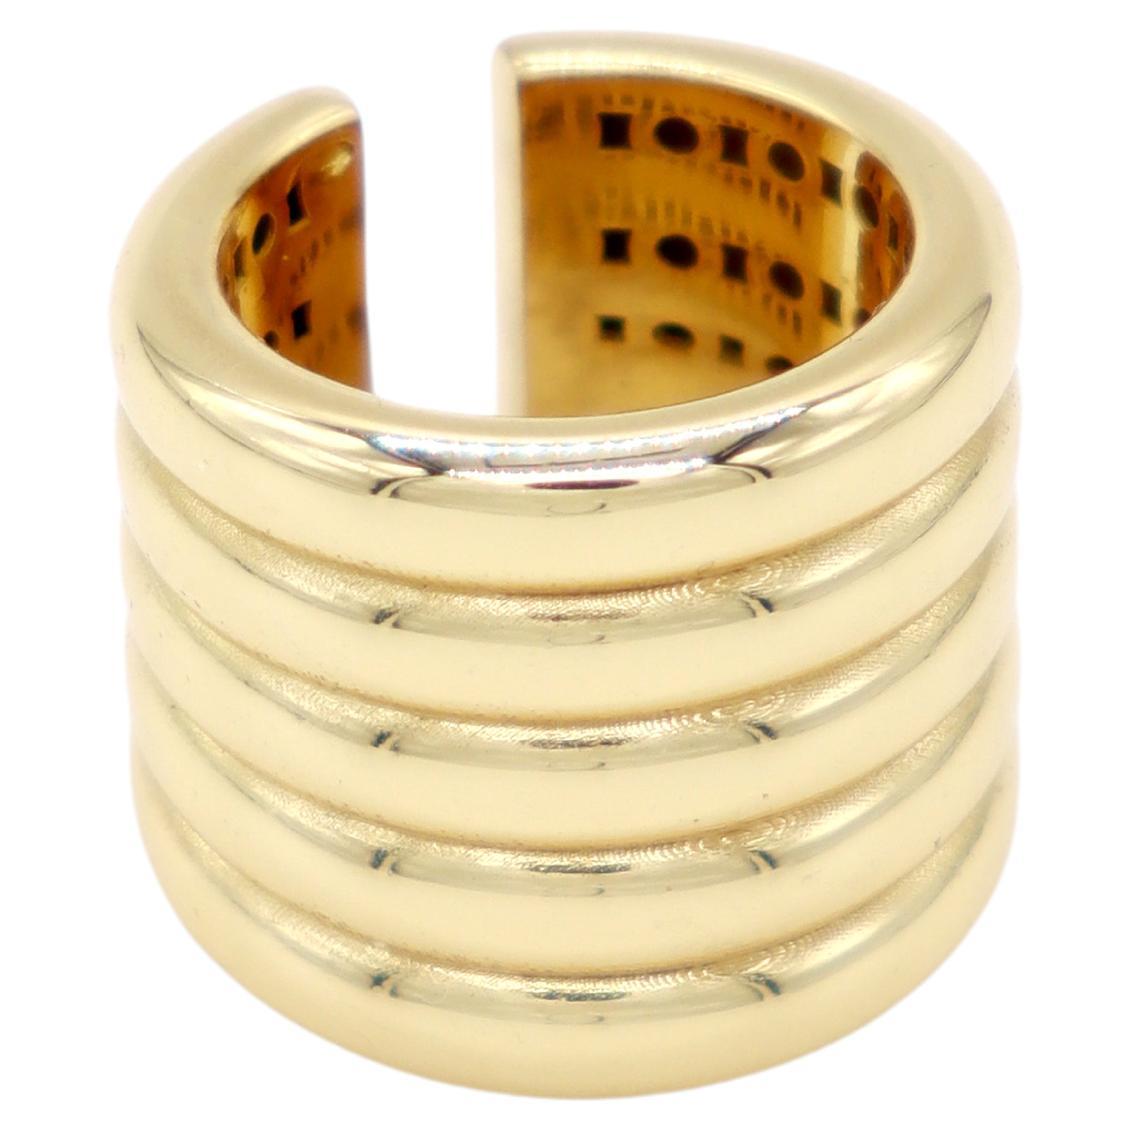 Band ring, 925 sterling silver, 18 kt. gold plated, adjustable, Samantha